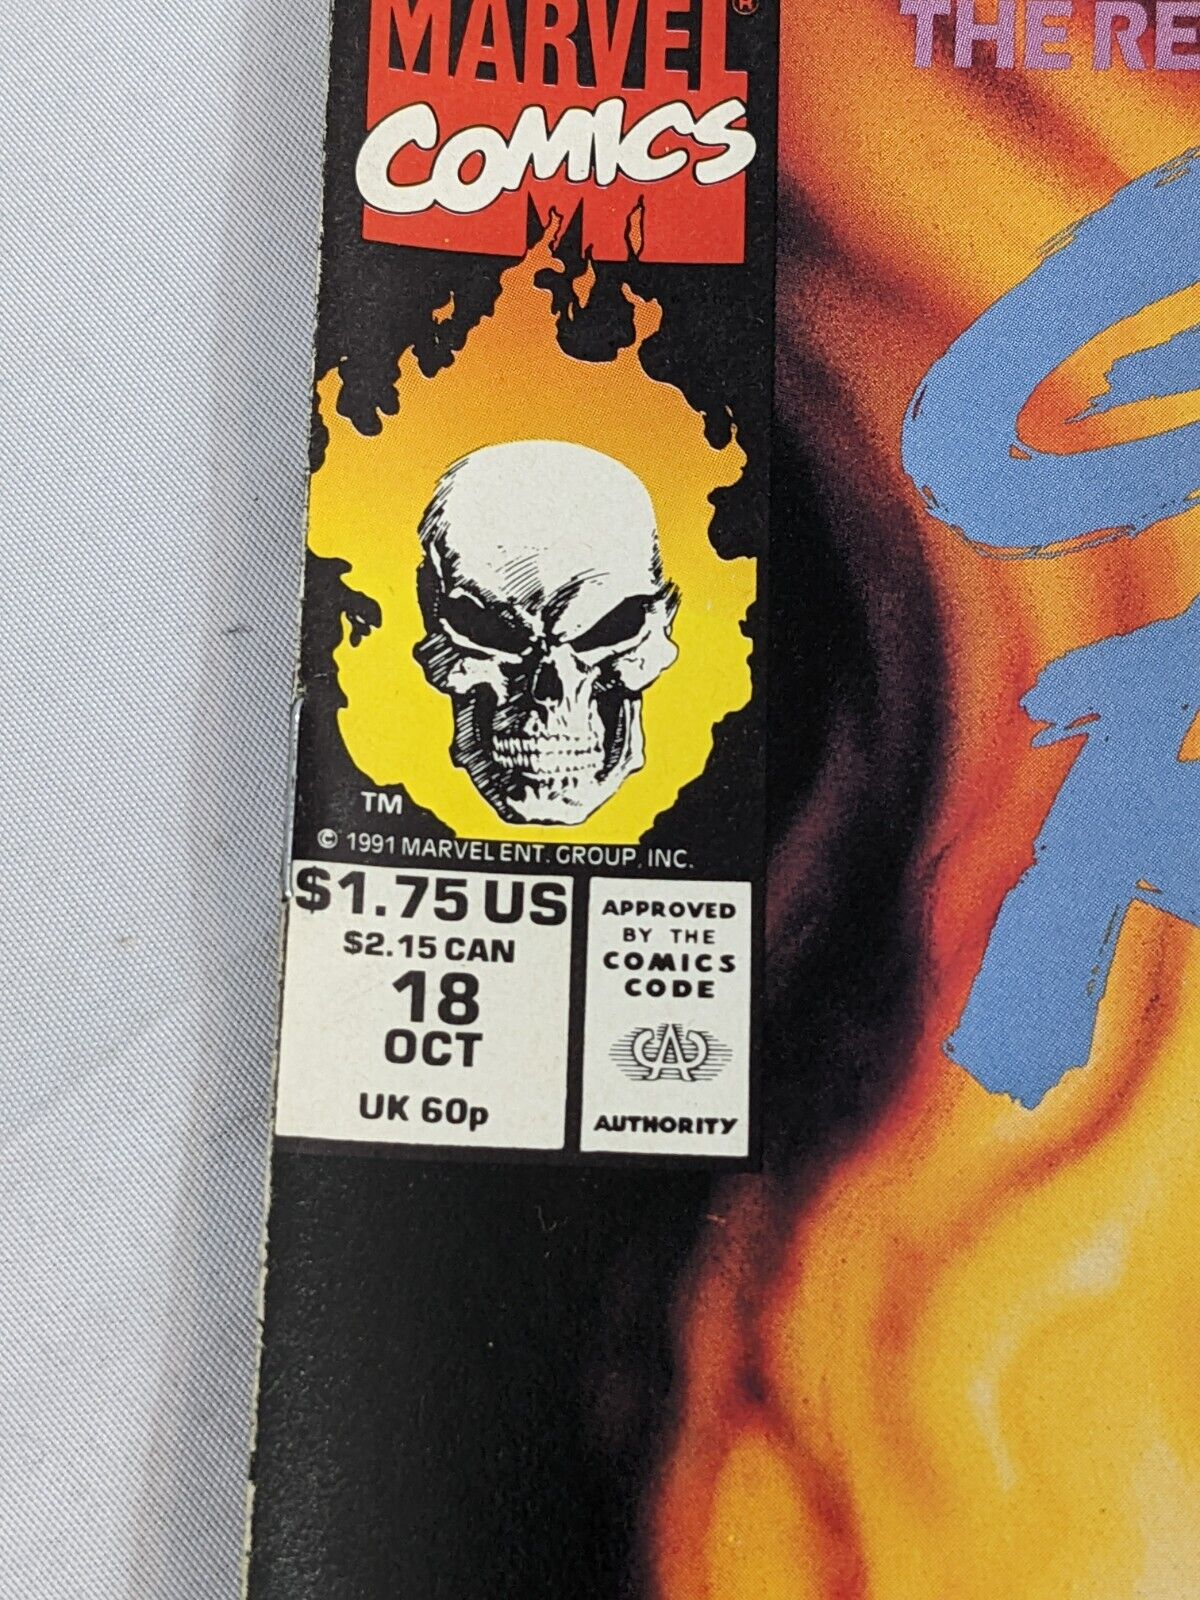 Marvel Comics Ghost Rider: The Resurrection of Barbara Ketch! #18 October 1991